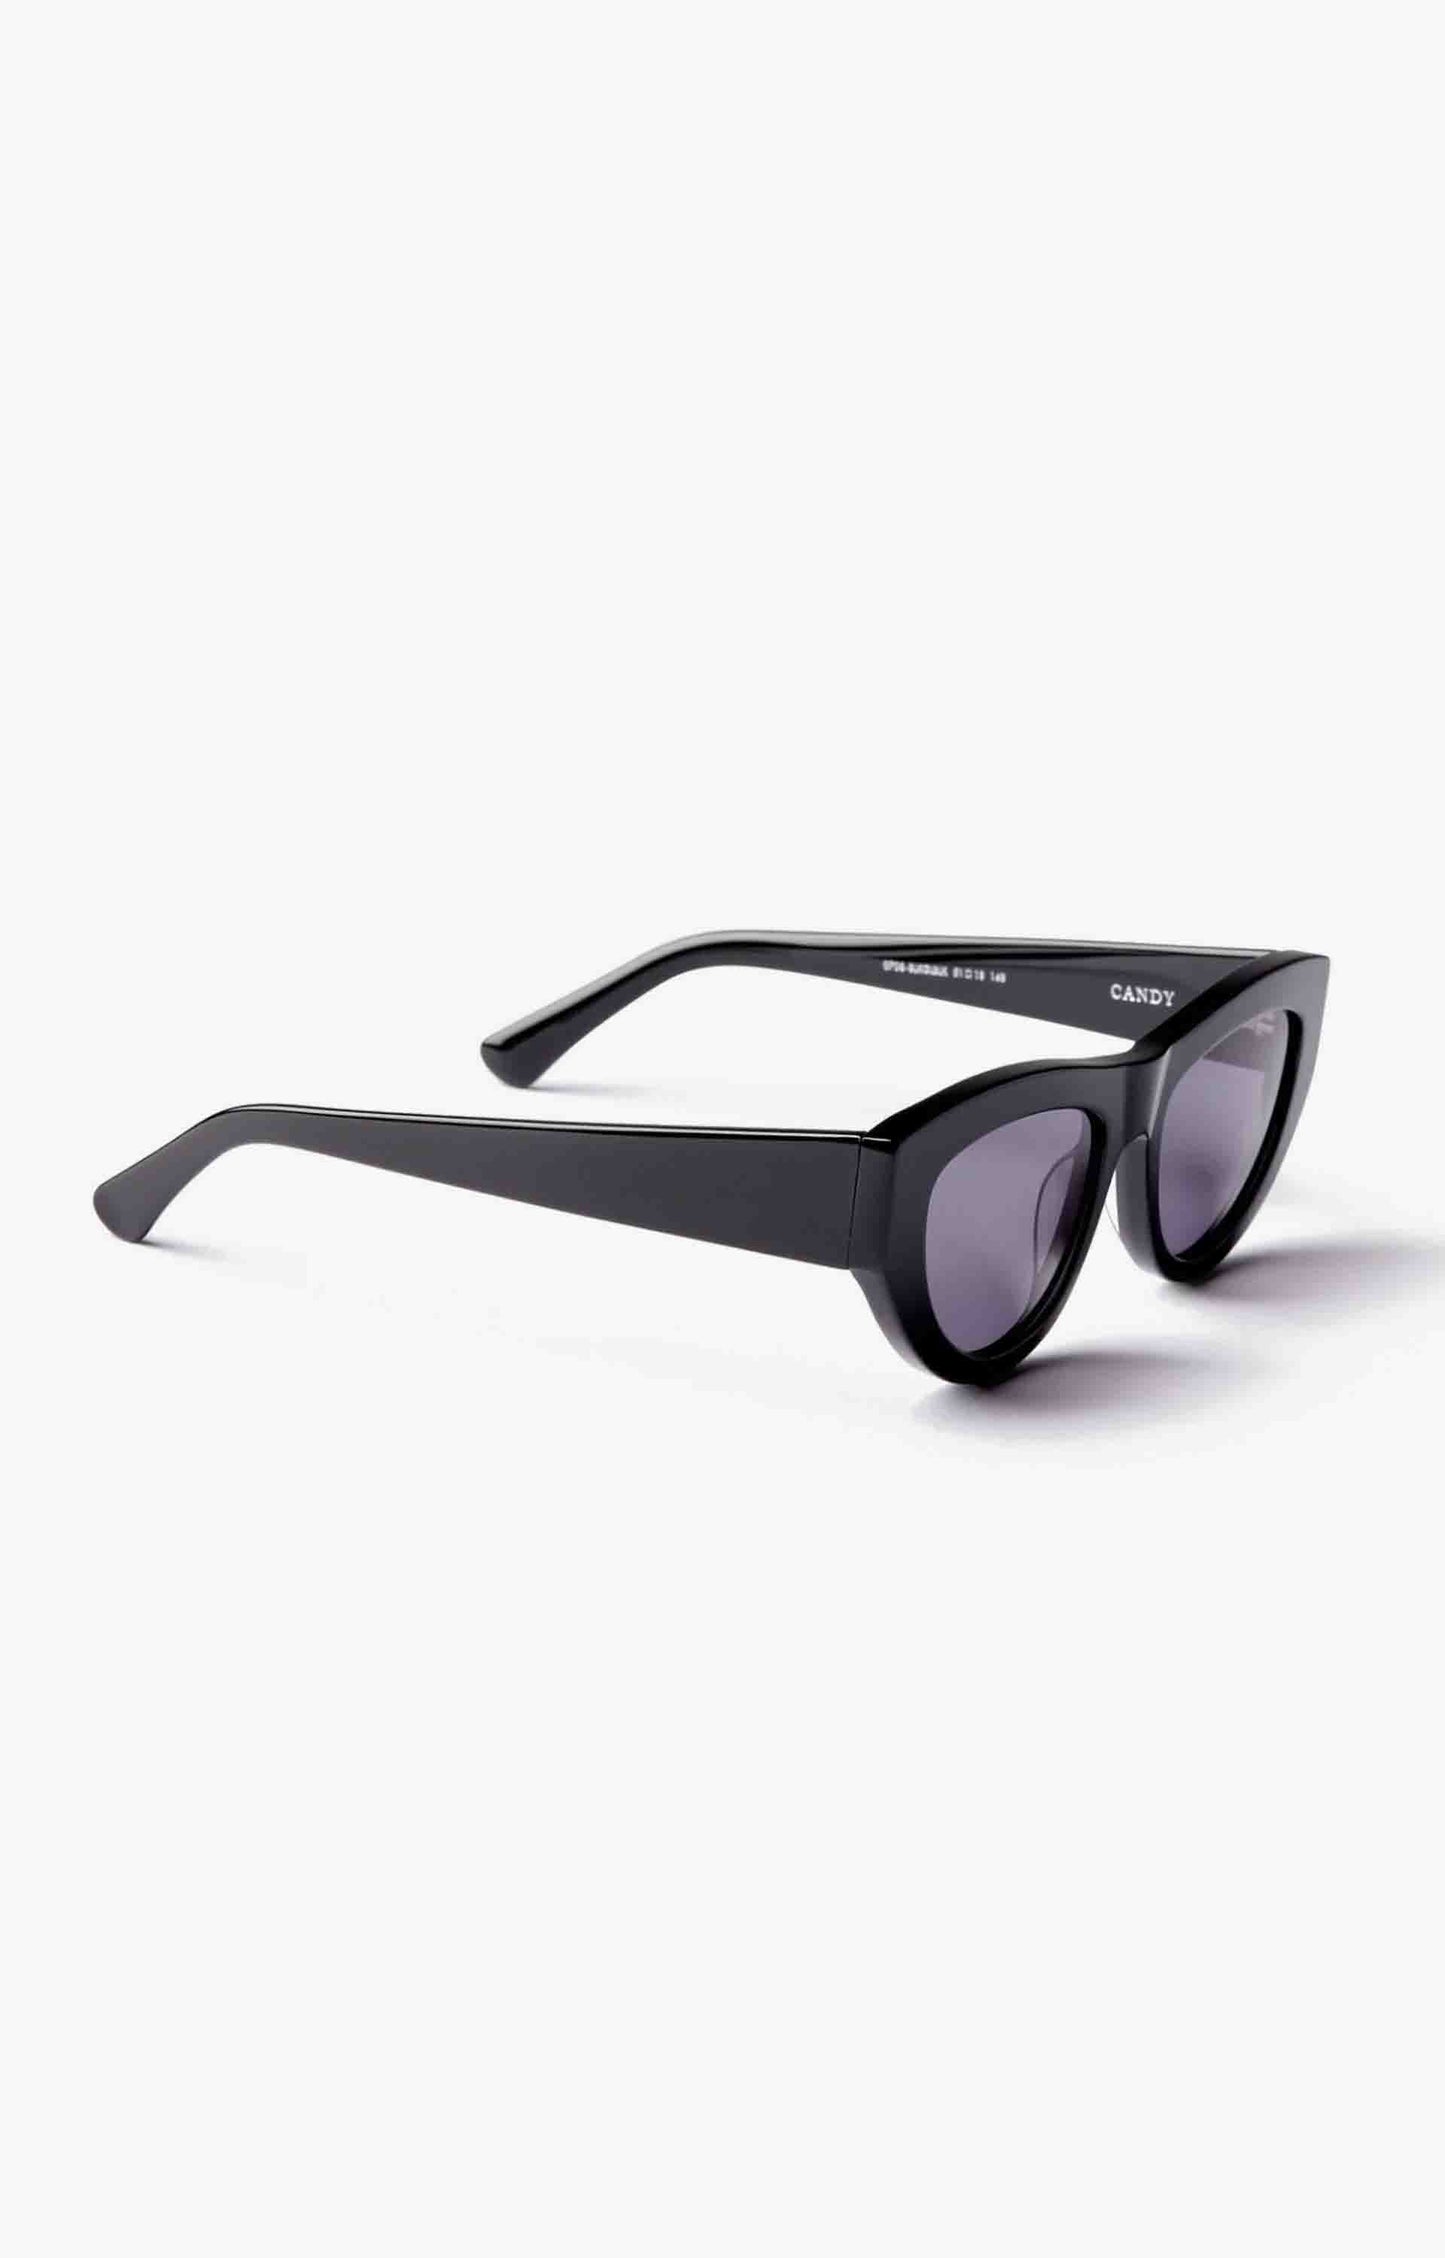 Epokhe Candy Sunglasses, Black Gloss/Black